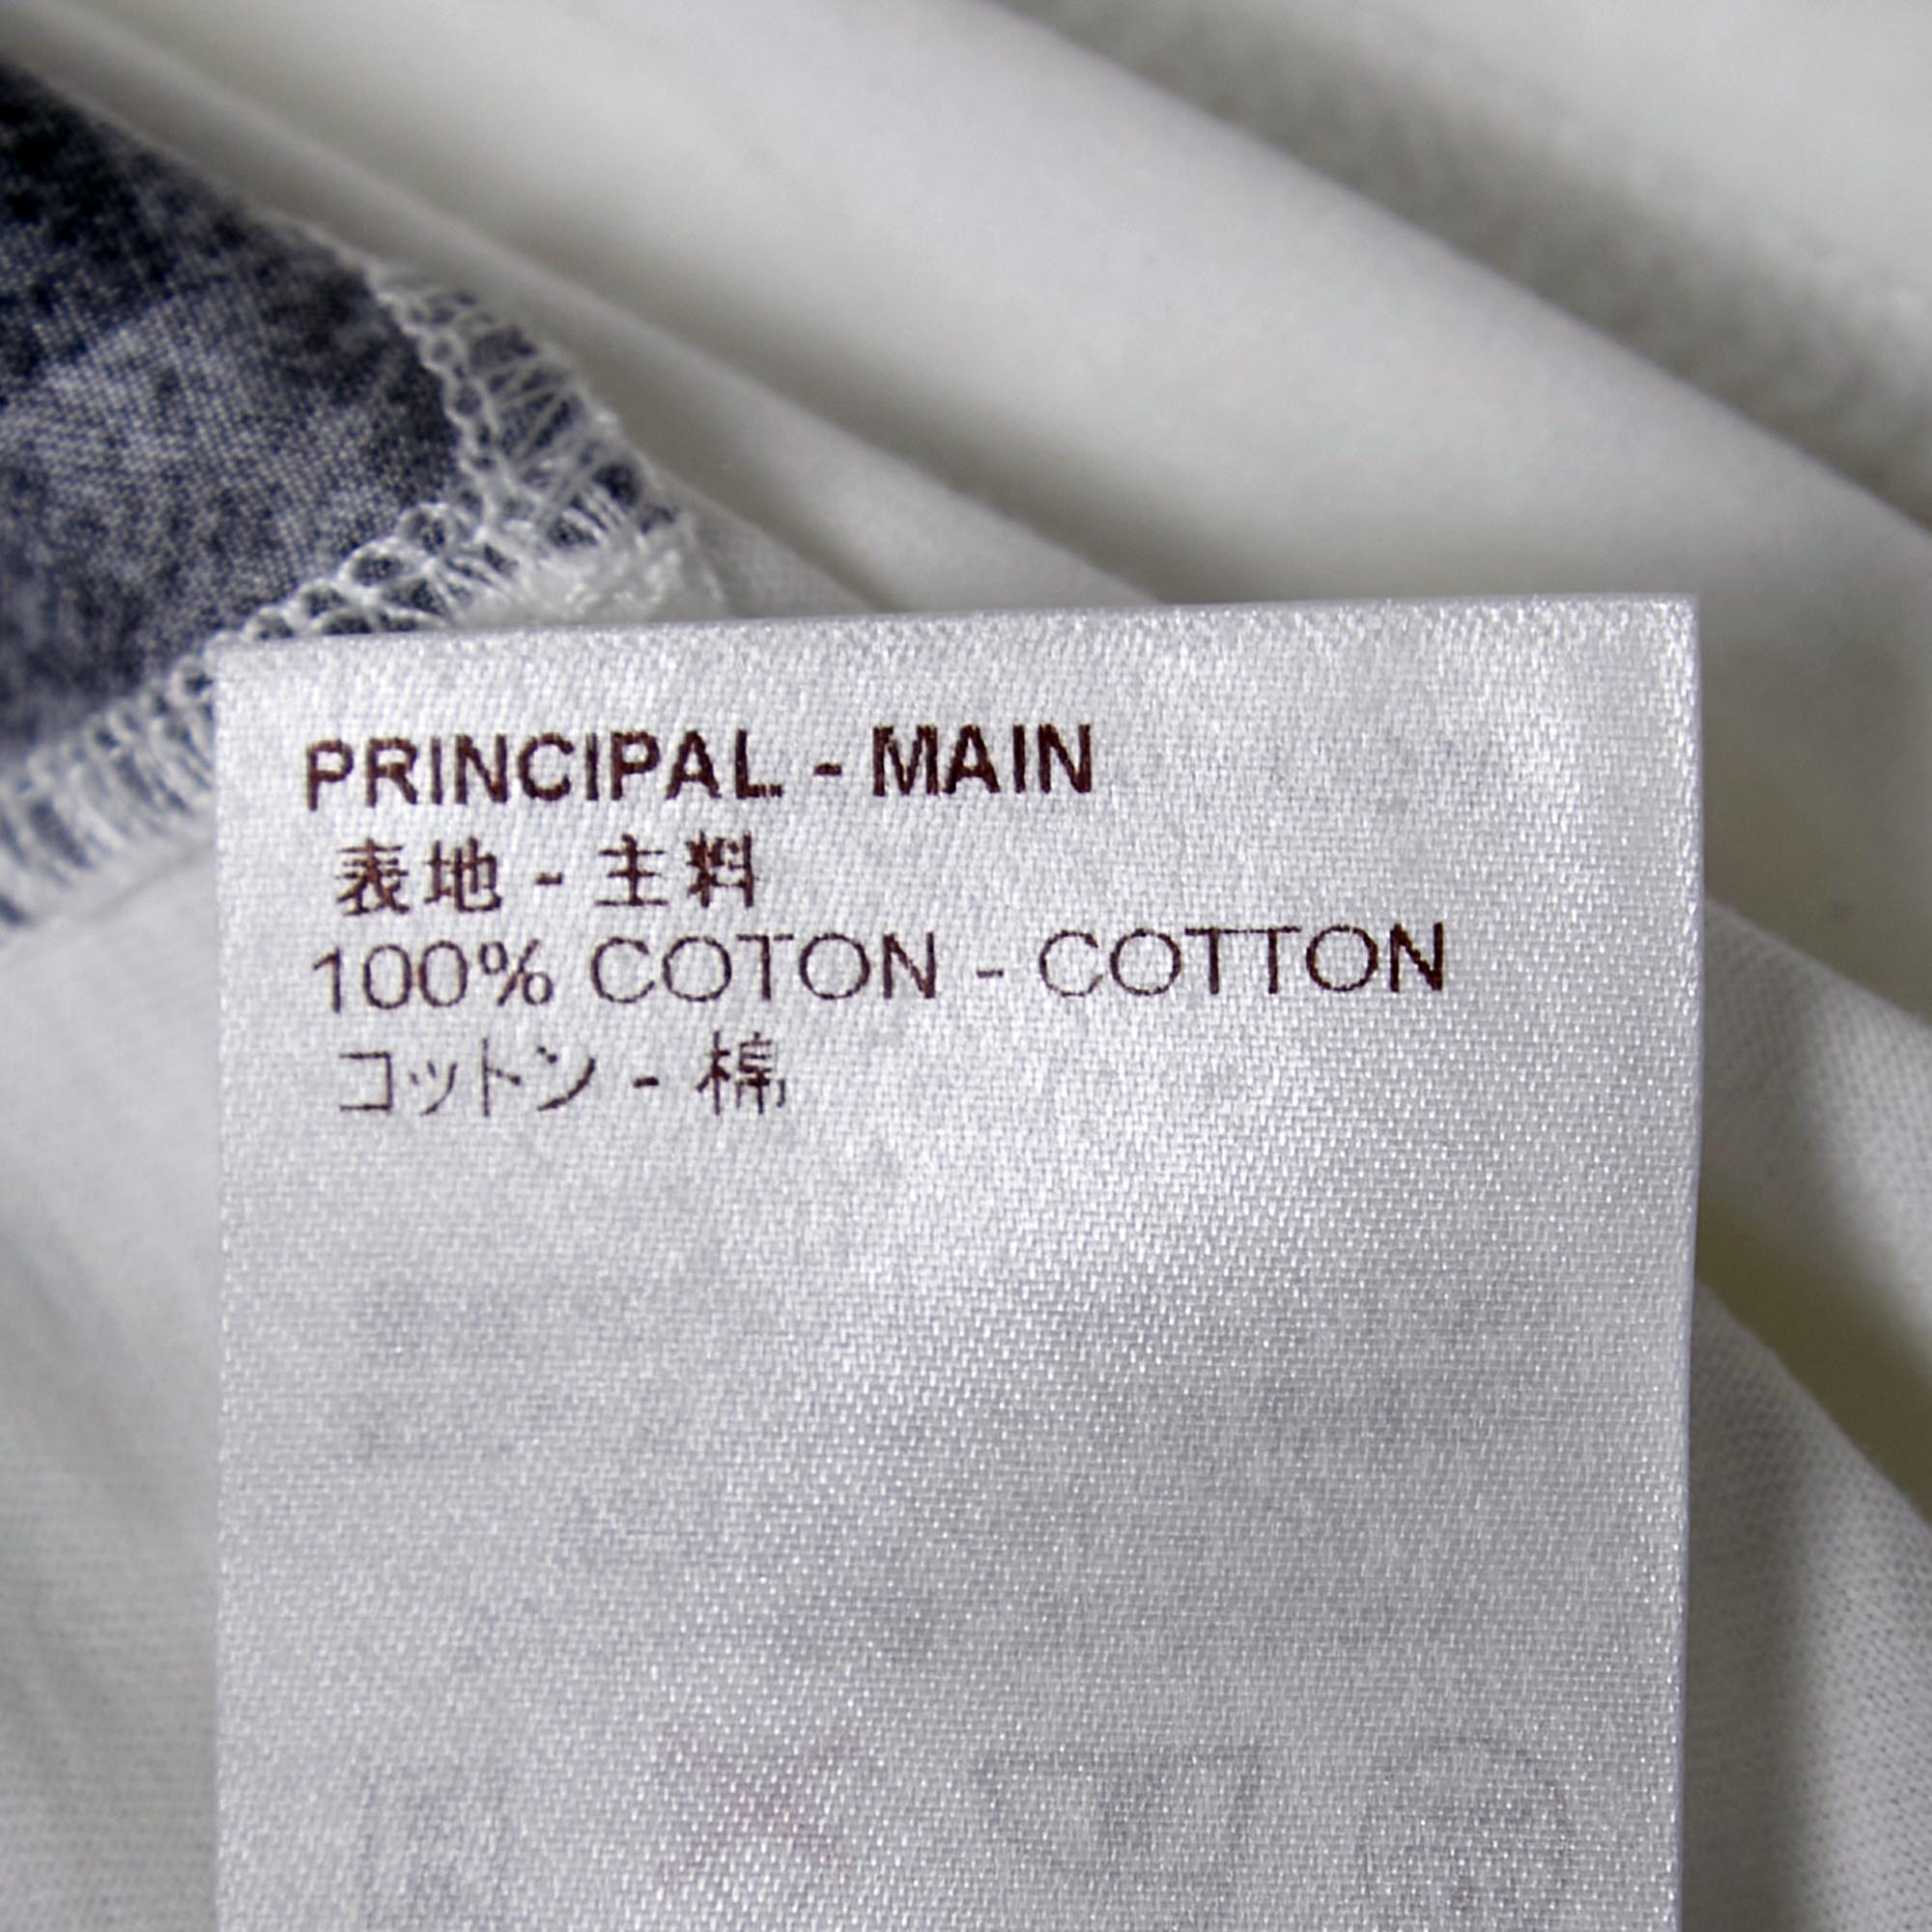 Louis Vuitton White Printed Cotton Crew Neck Half Sleeve T-Shirt S